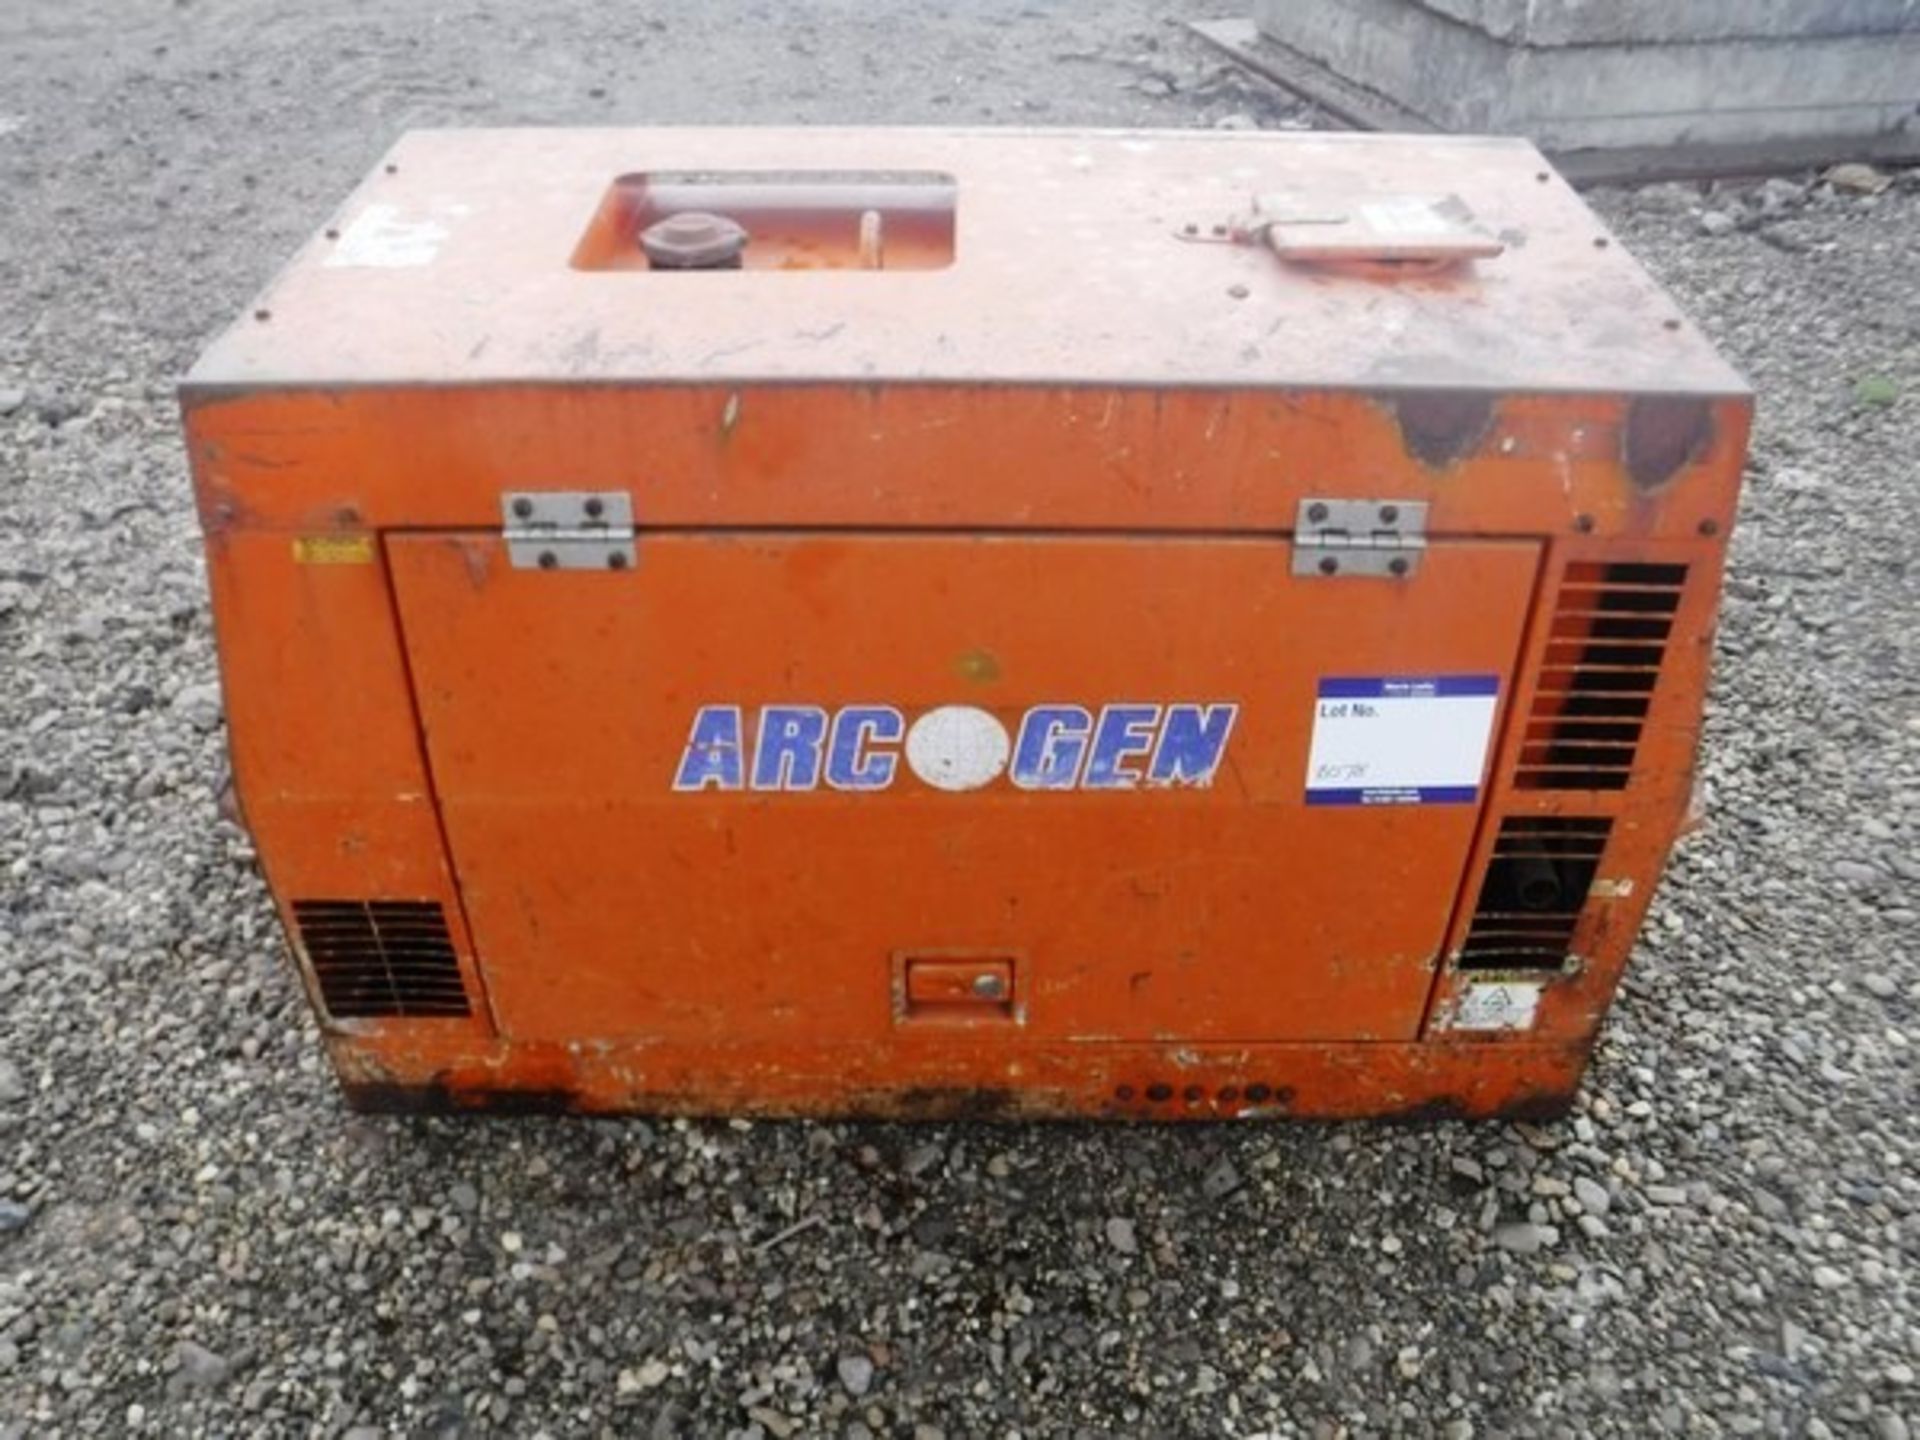 ARC-GEN welder 300SSD. S/N 300102 5278 hrs (not verified)